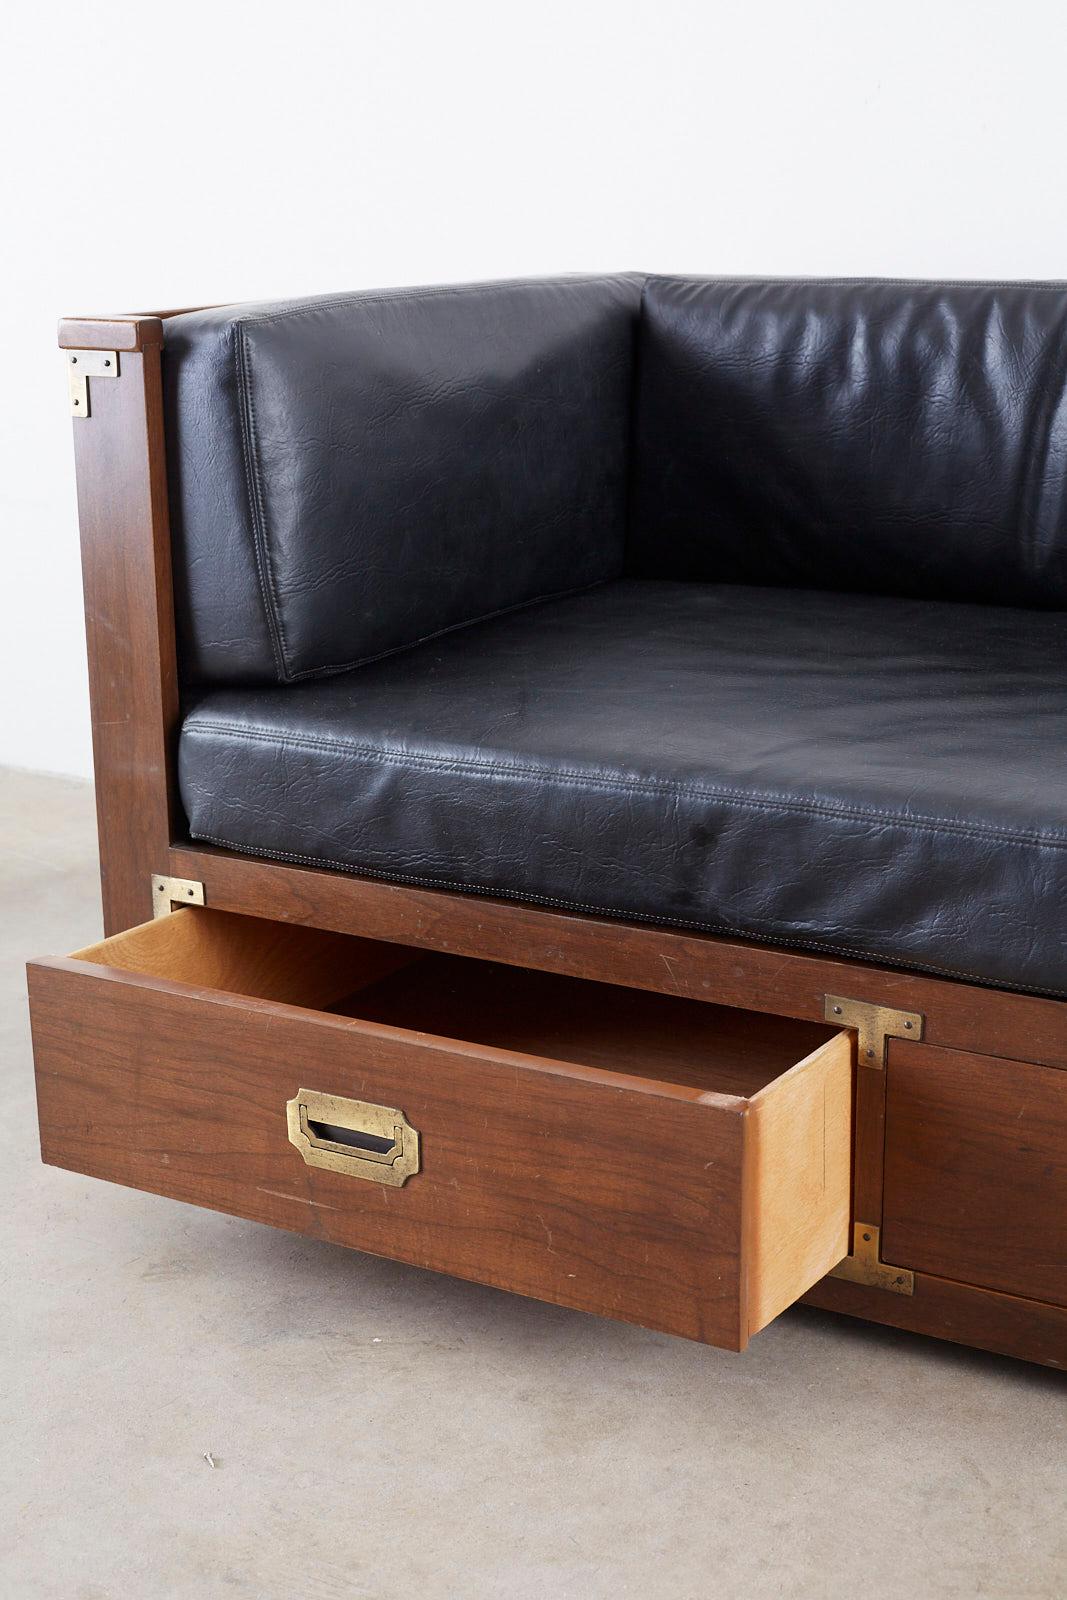 marge carson furniture